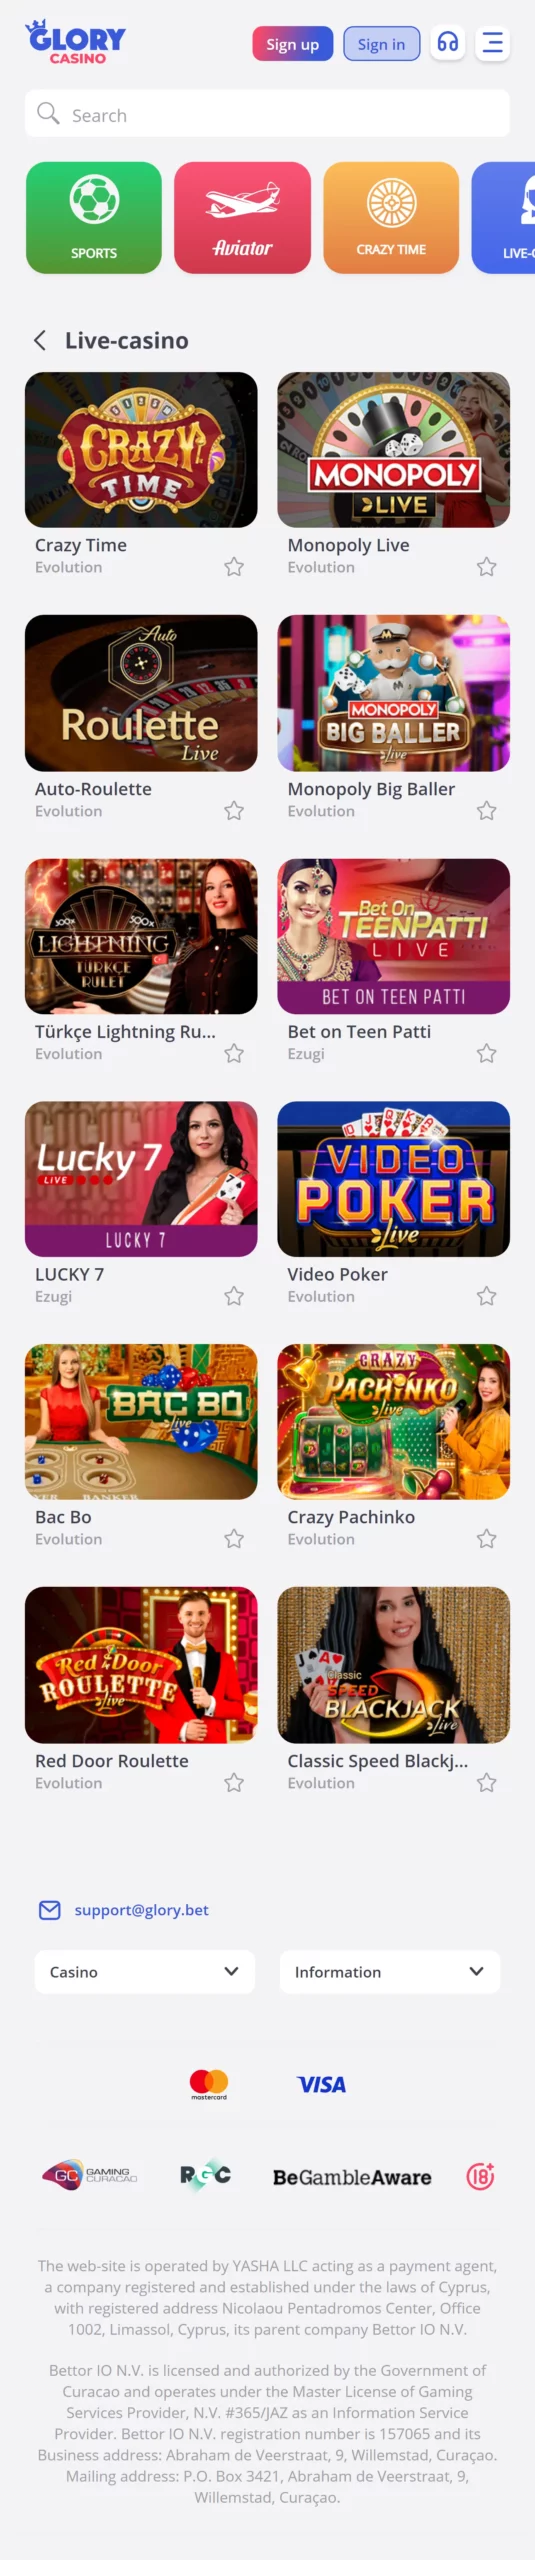 glory casino bangladesh app download